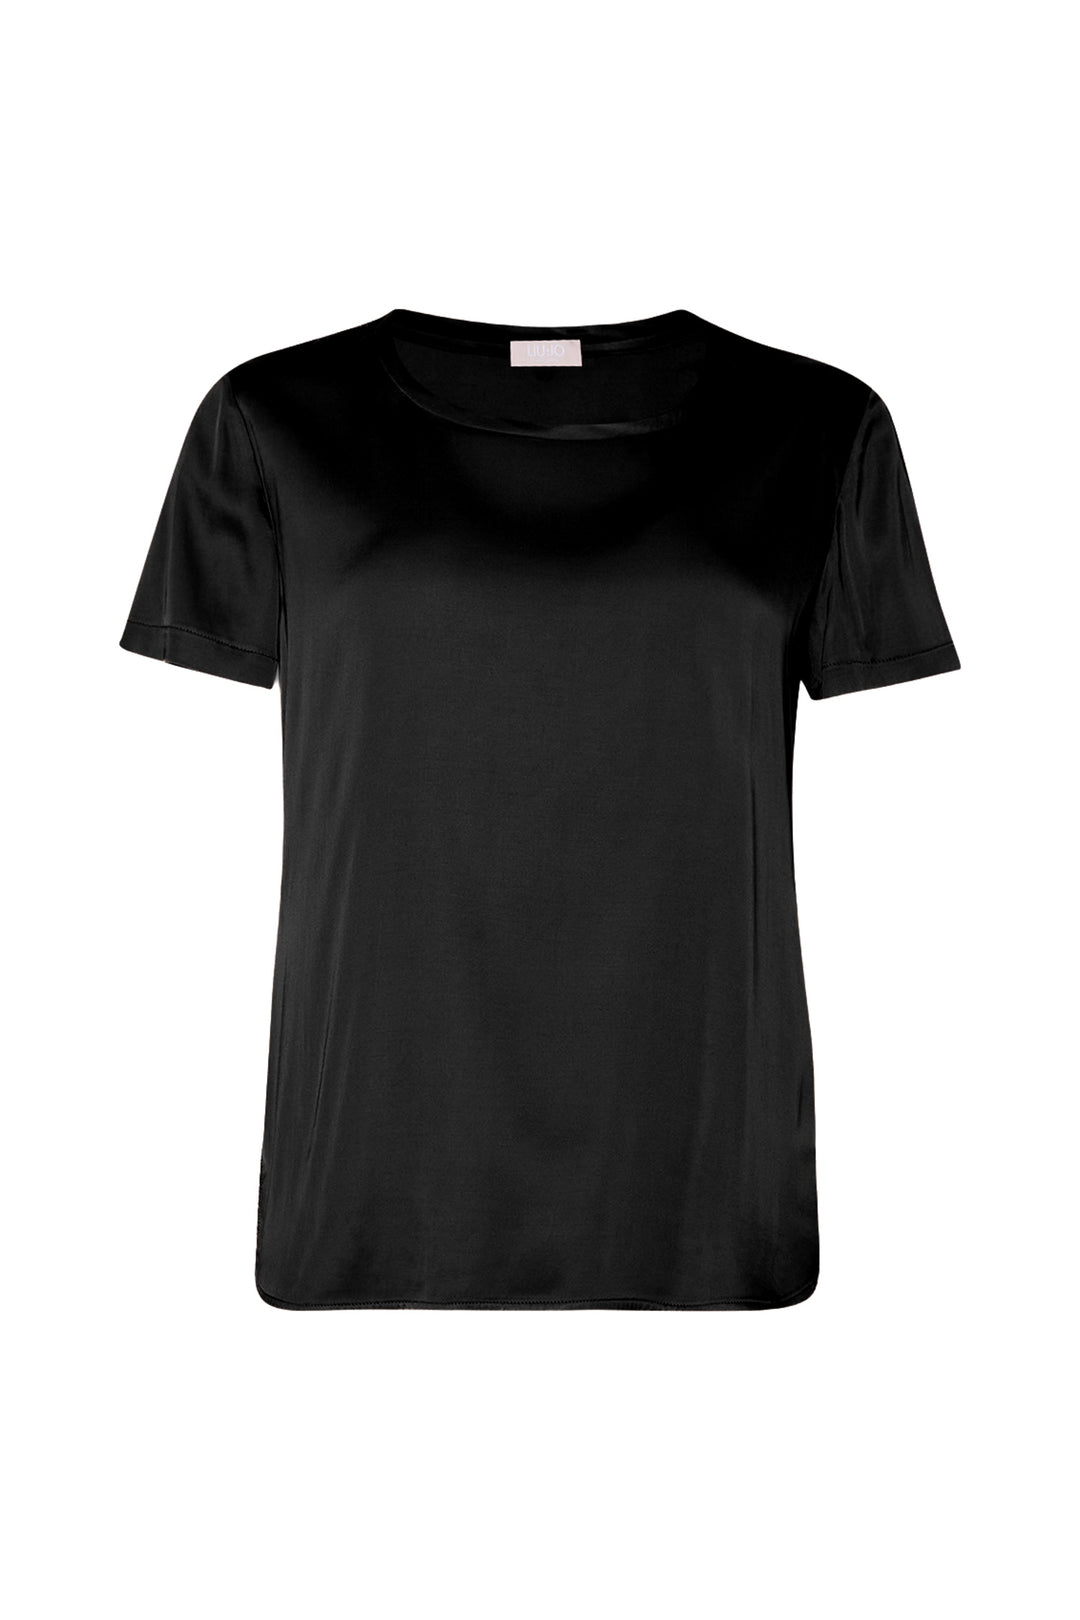 LIU JO T-shirt nera in raso - Mancinelli 1954